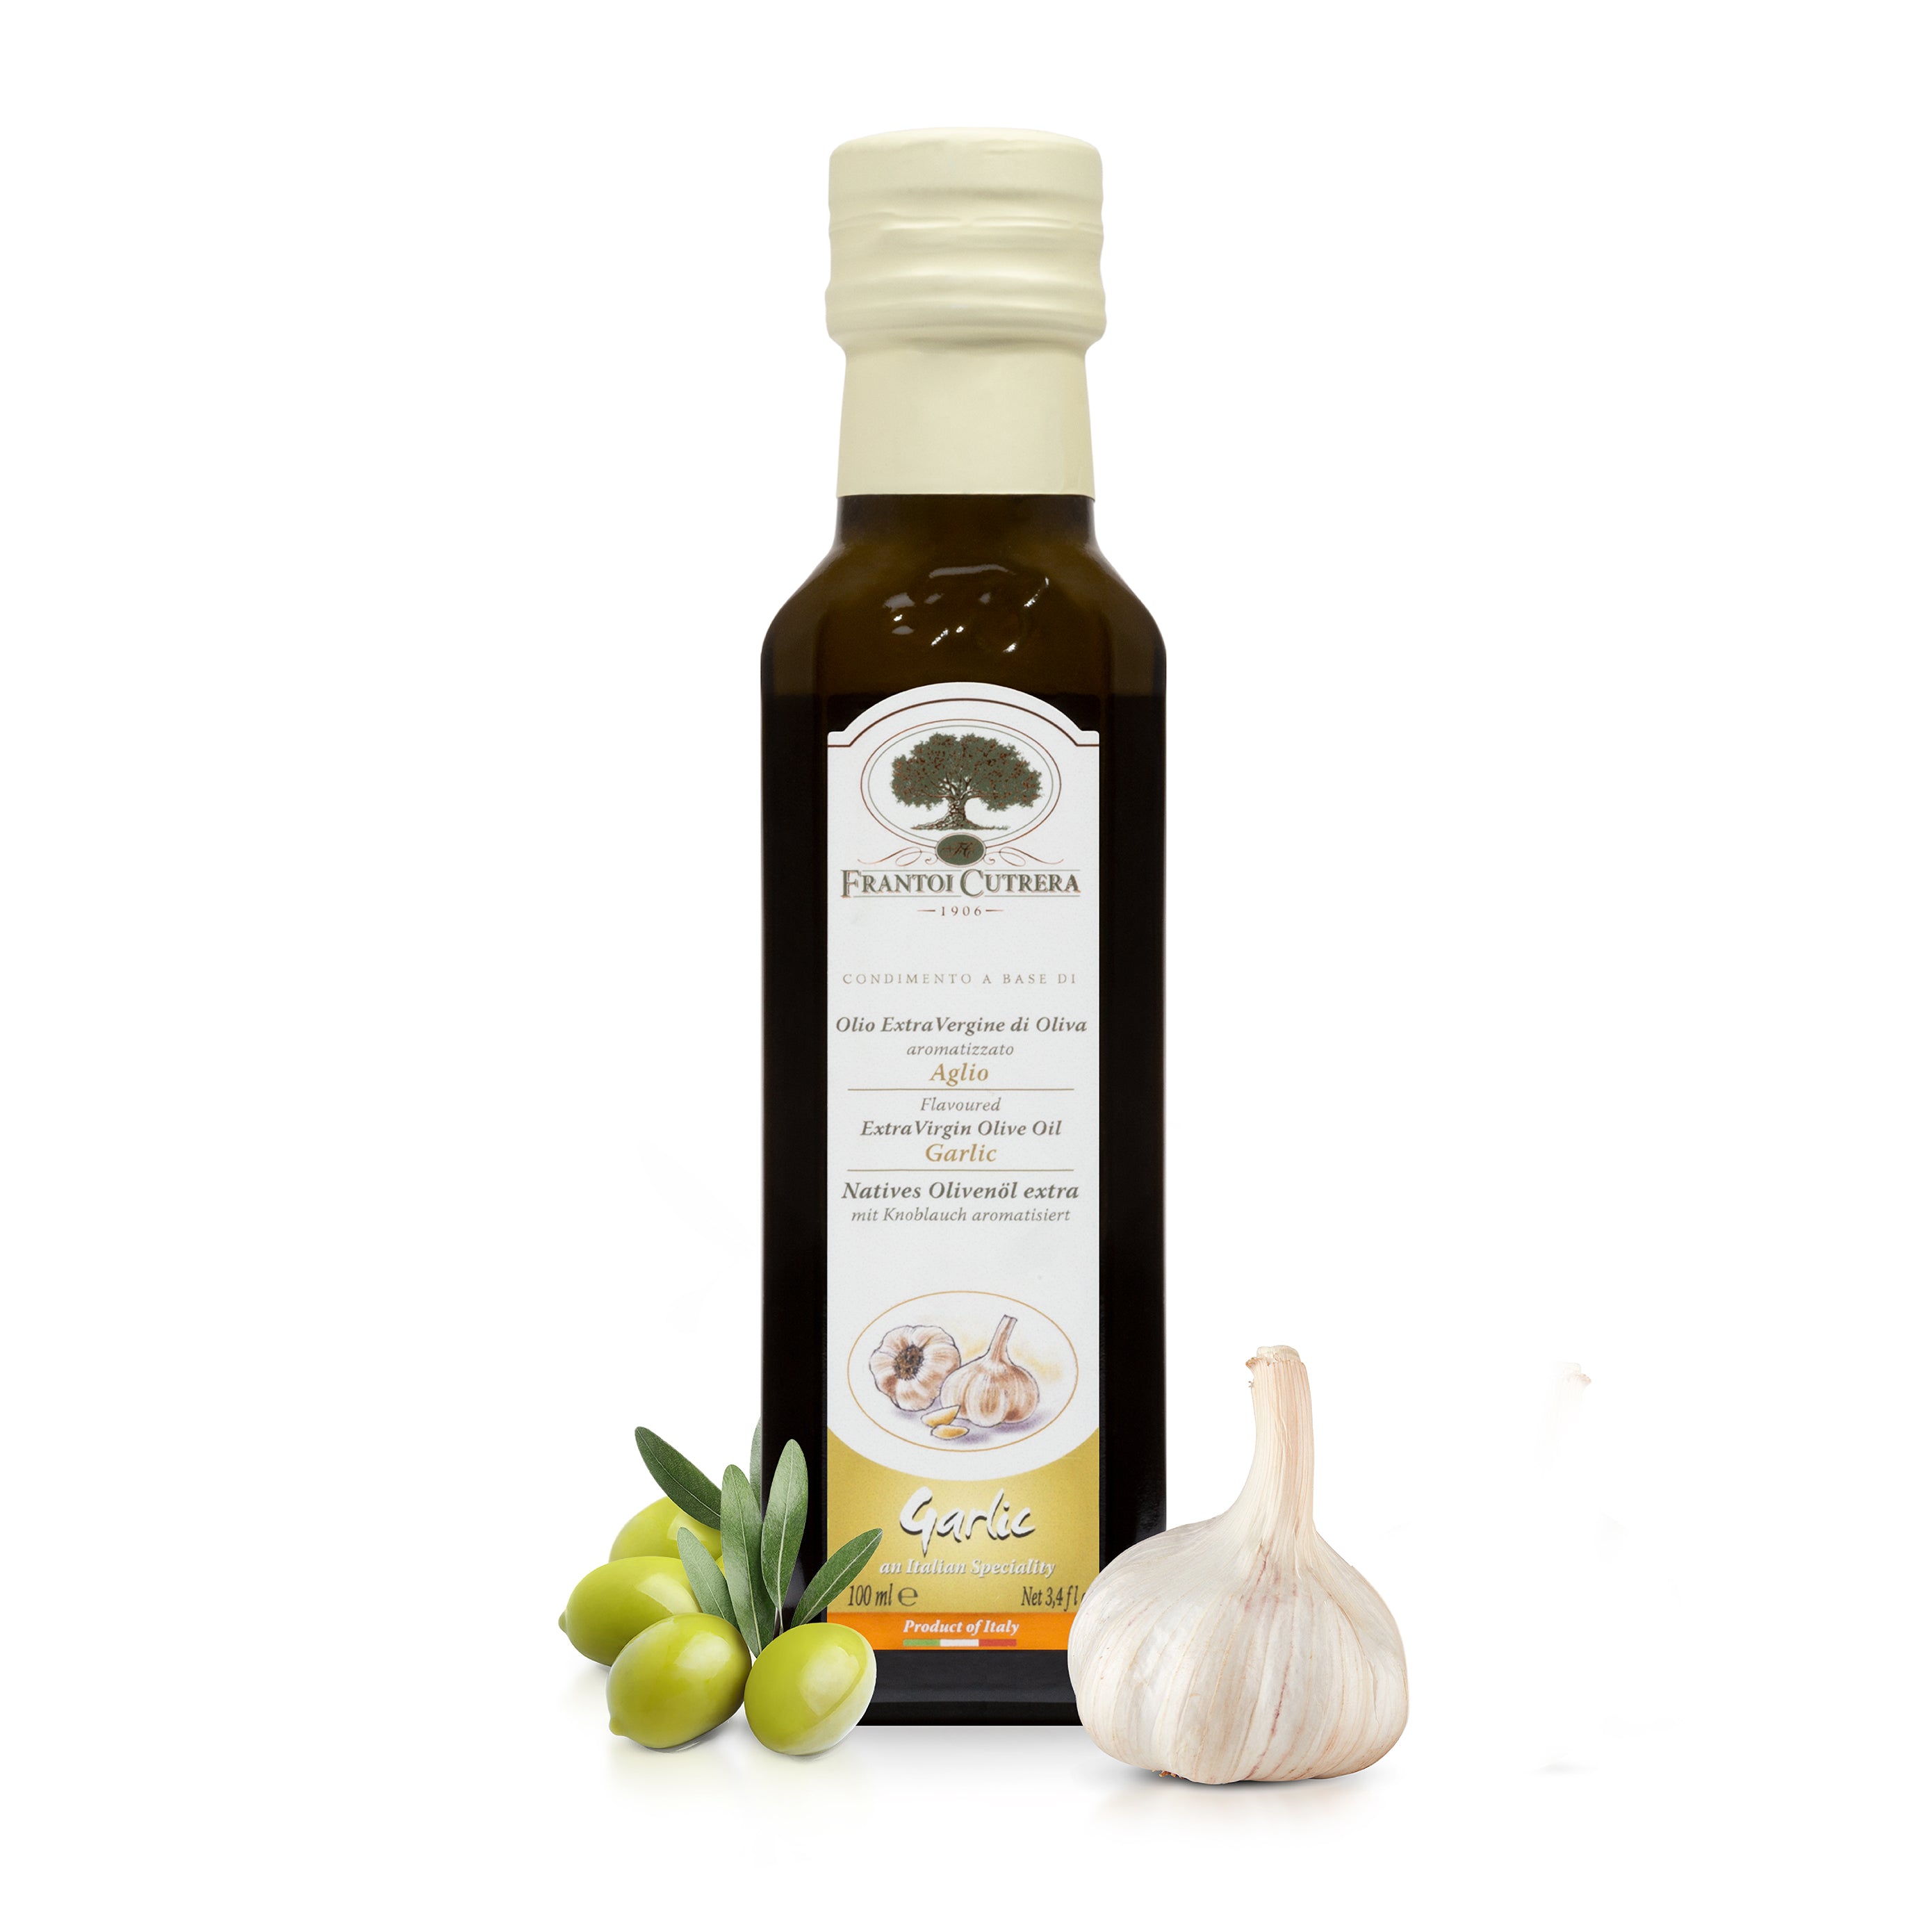 Frantoi Cutrera Garlic Infused Olive Oil